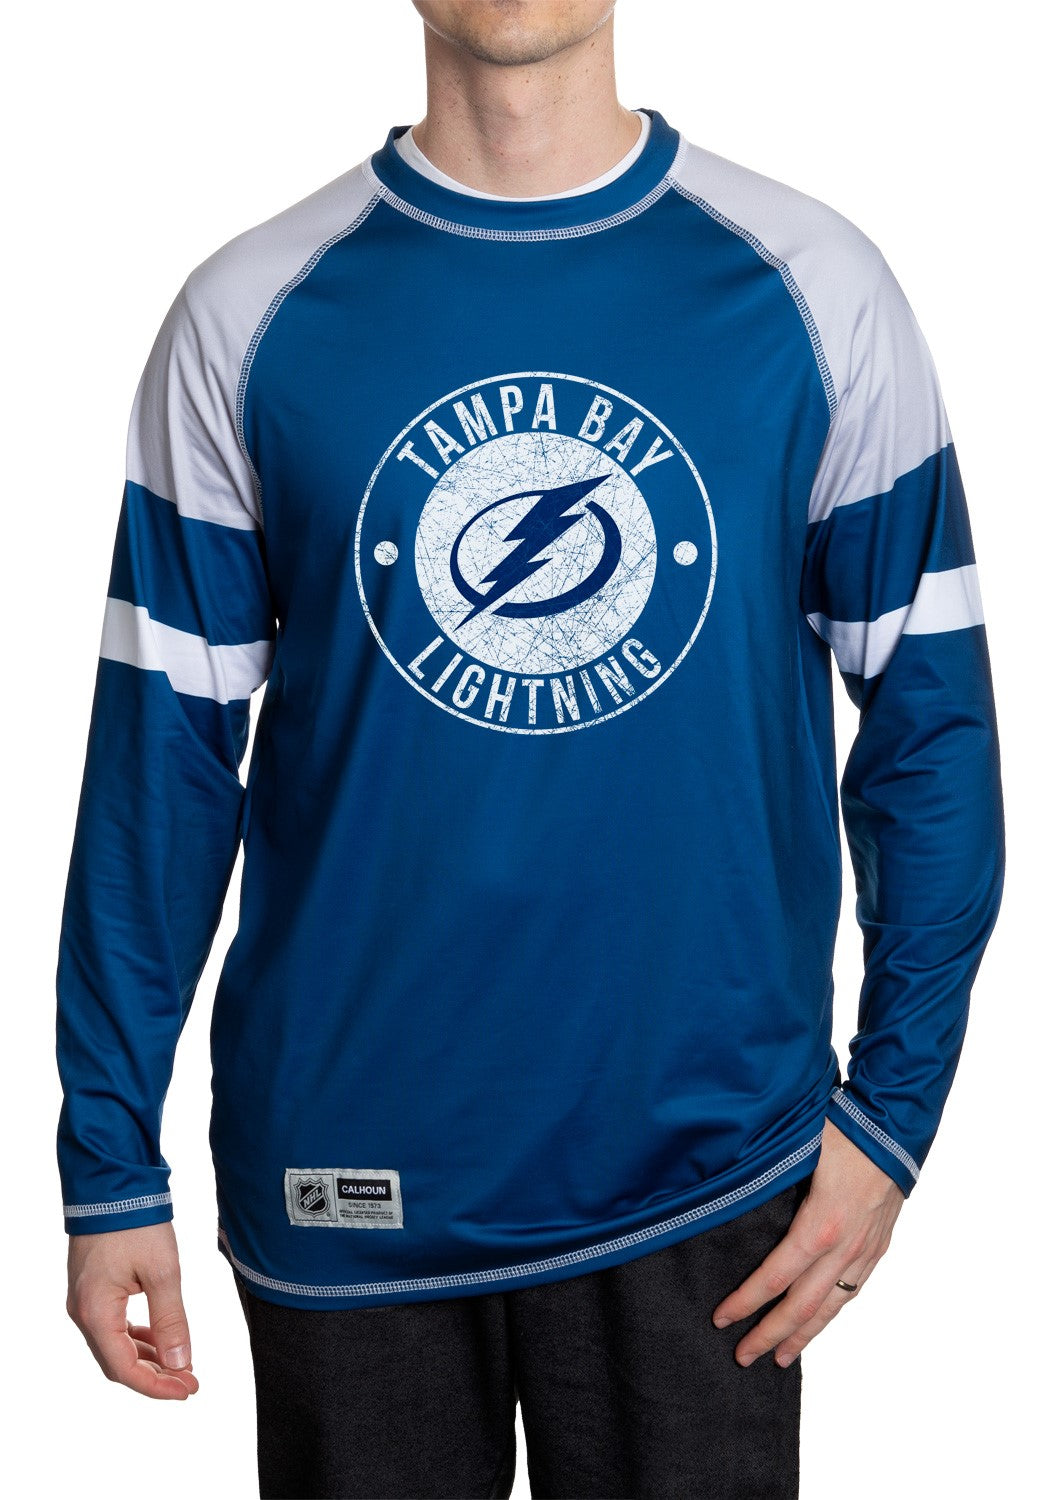 Tampa Bay Lightning Thermal Long Sleeve Rash Guard Shirt